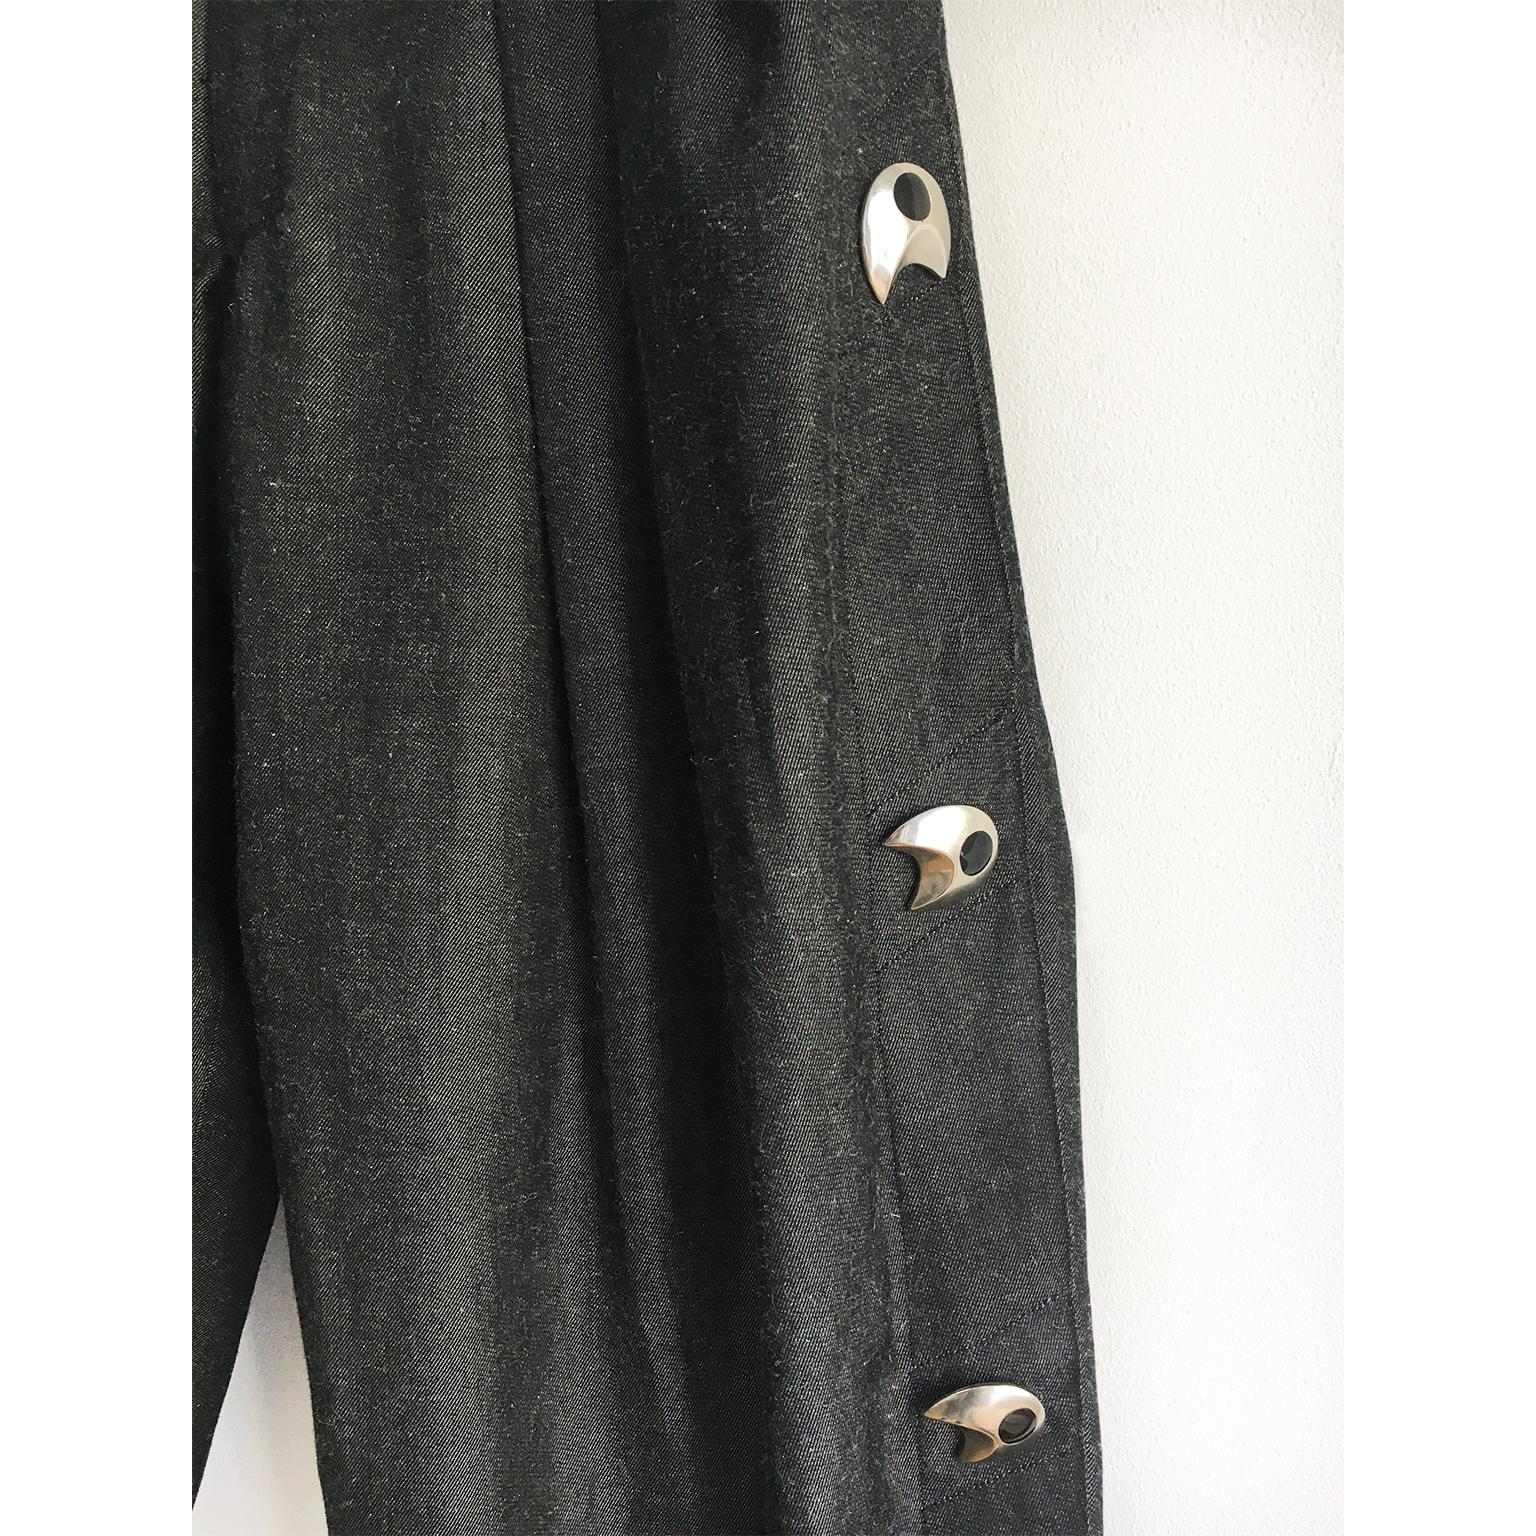 Kansai Yamamoto Dark Grey Jacket Pantsuit Circa Mid 80s For Sale 3